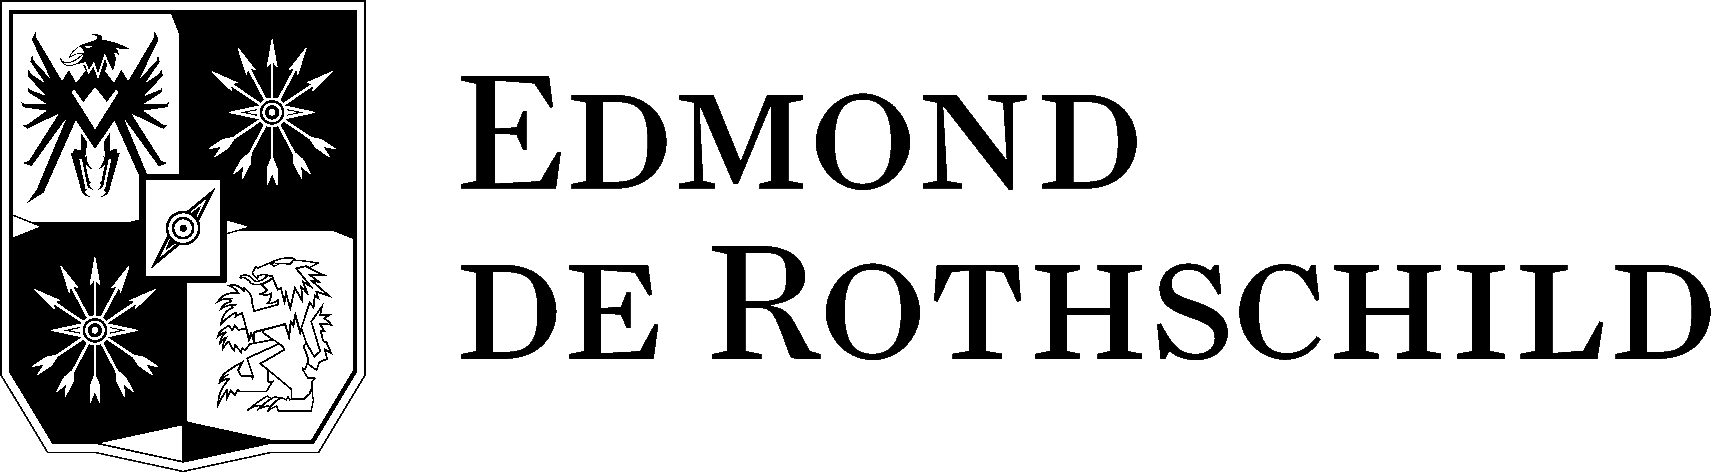 Logo Edmonda de Rothschilda 1